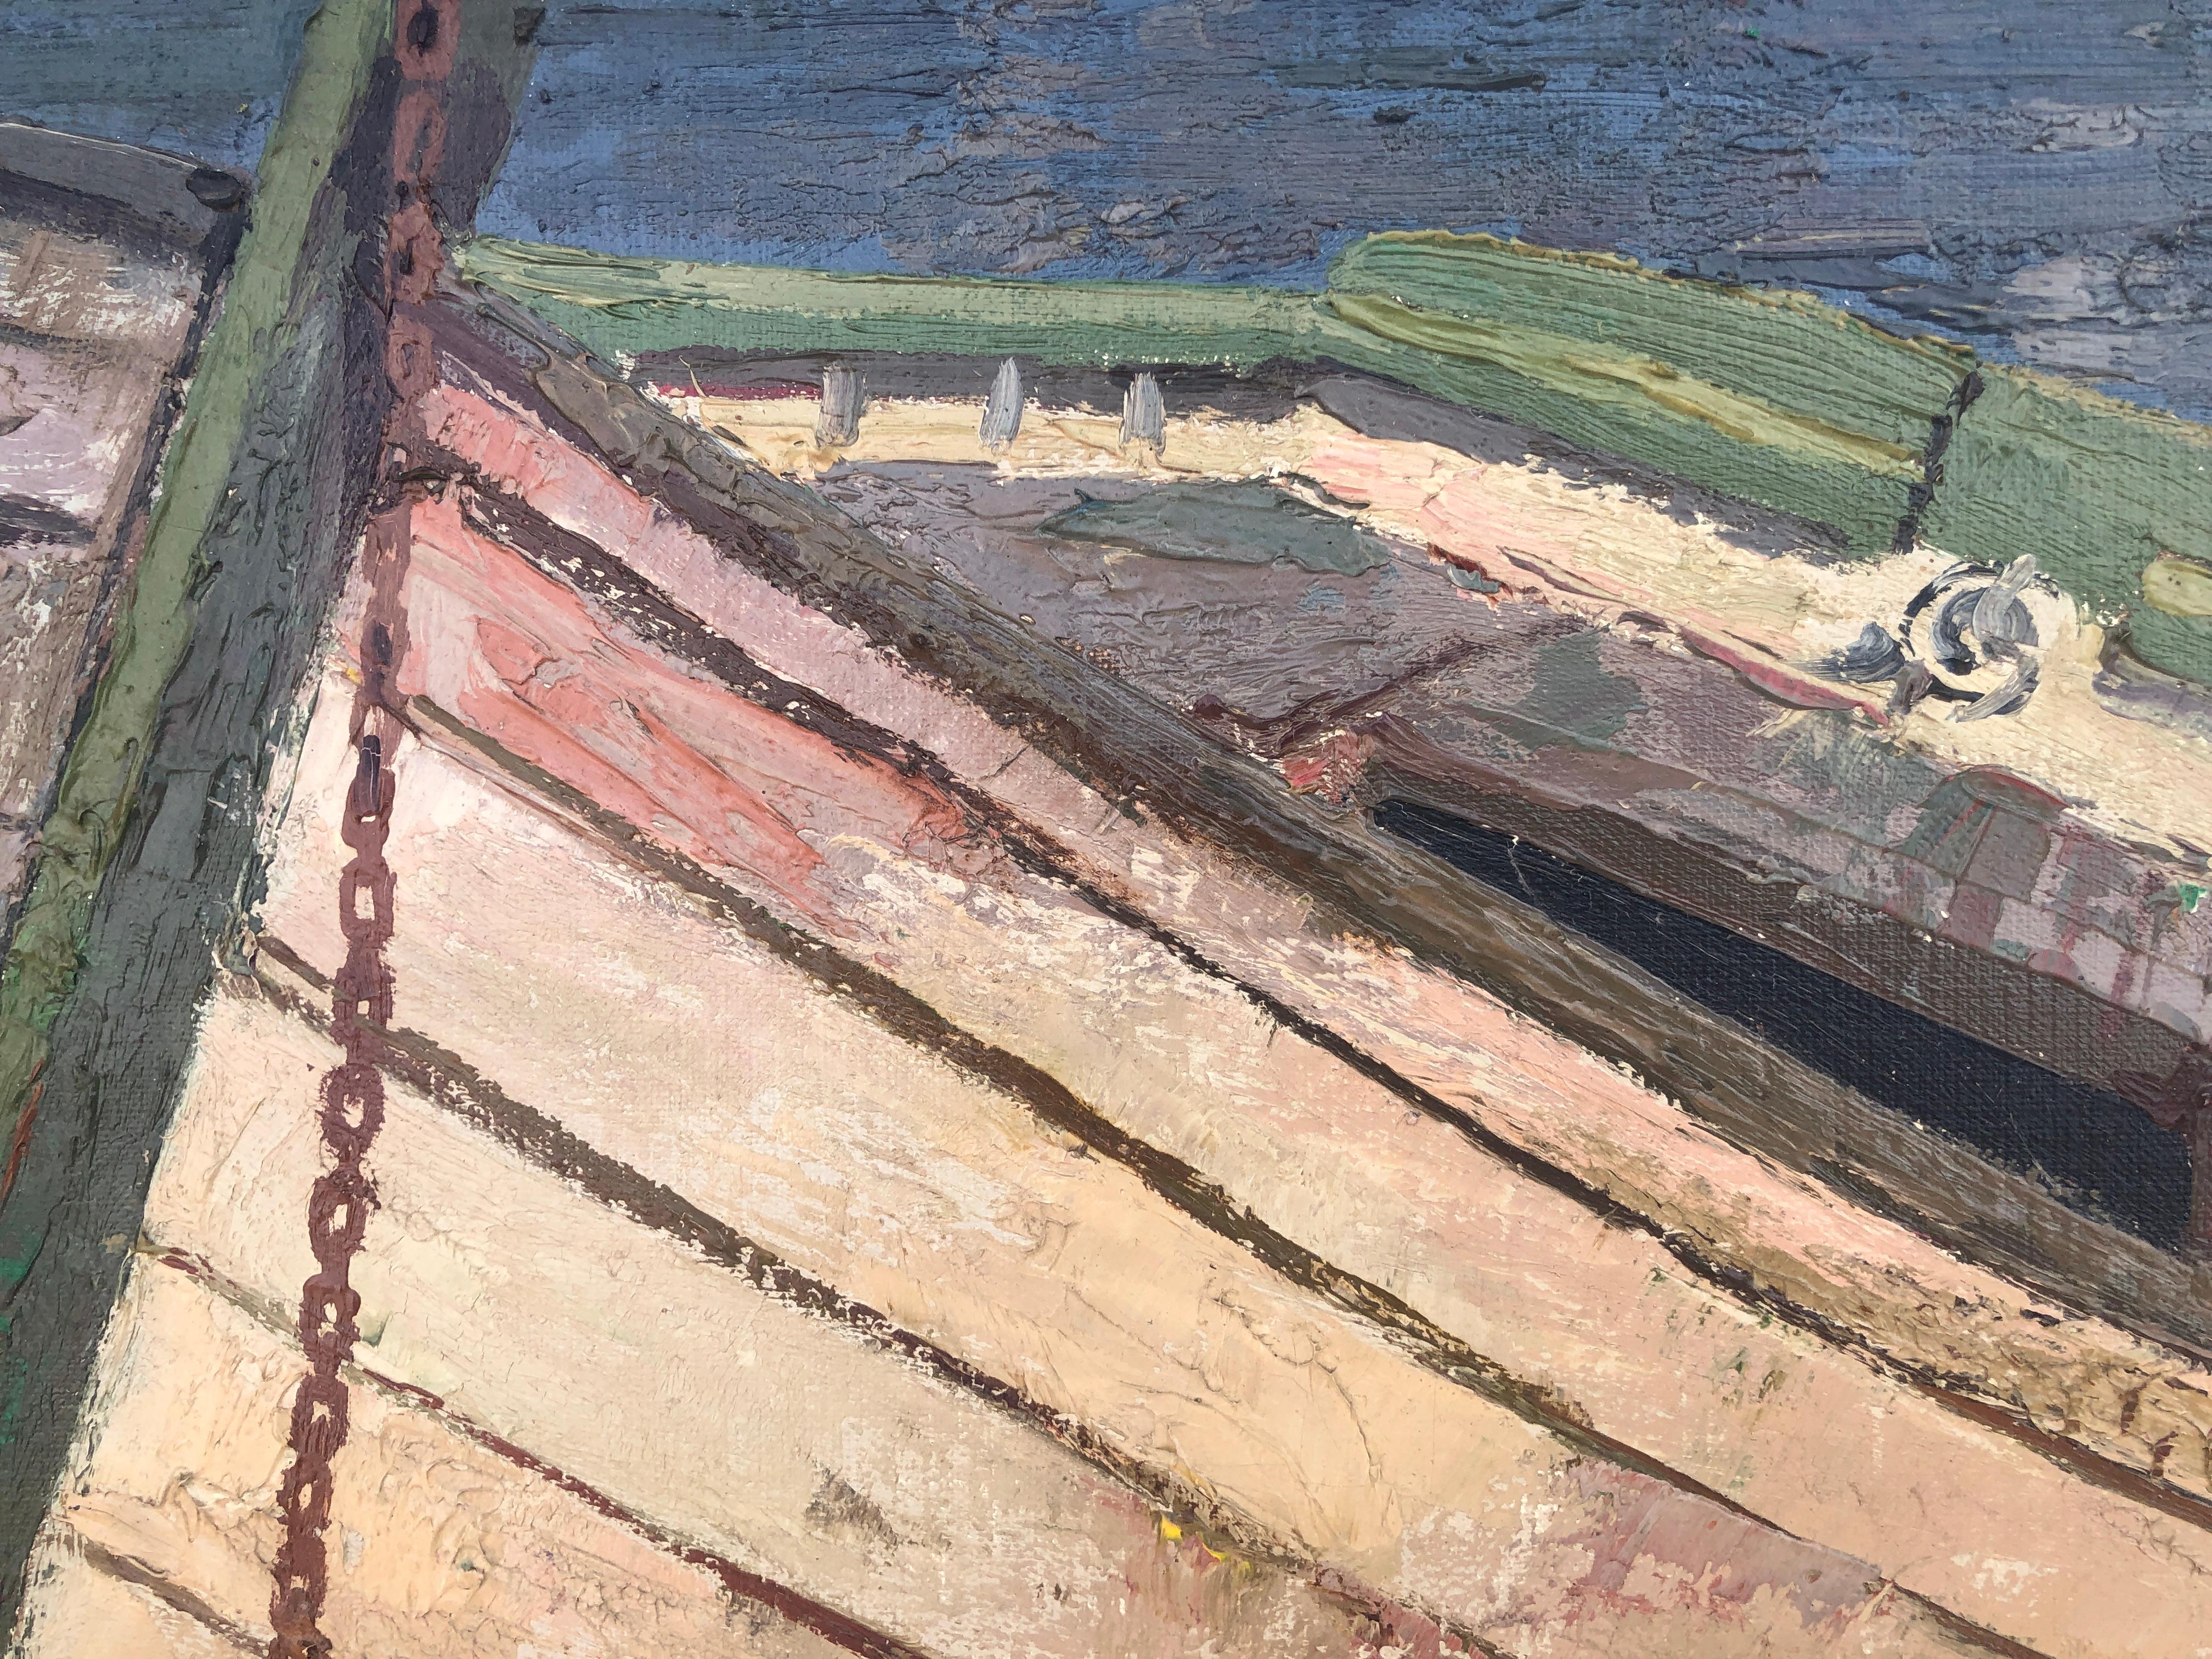 Boats on the beach Menorca Spain oil on canvas painting - Gray Landscape Painting by Francesc Poch Romeu